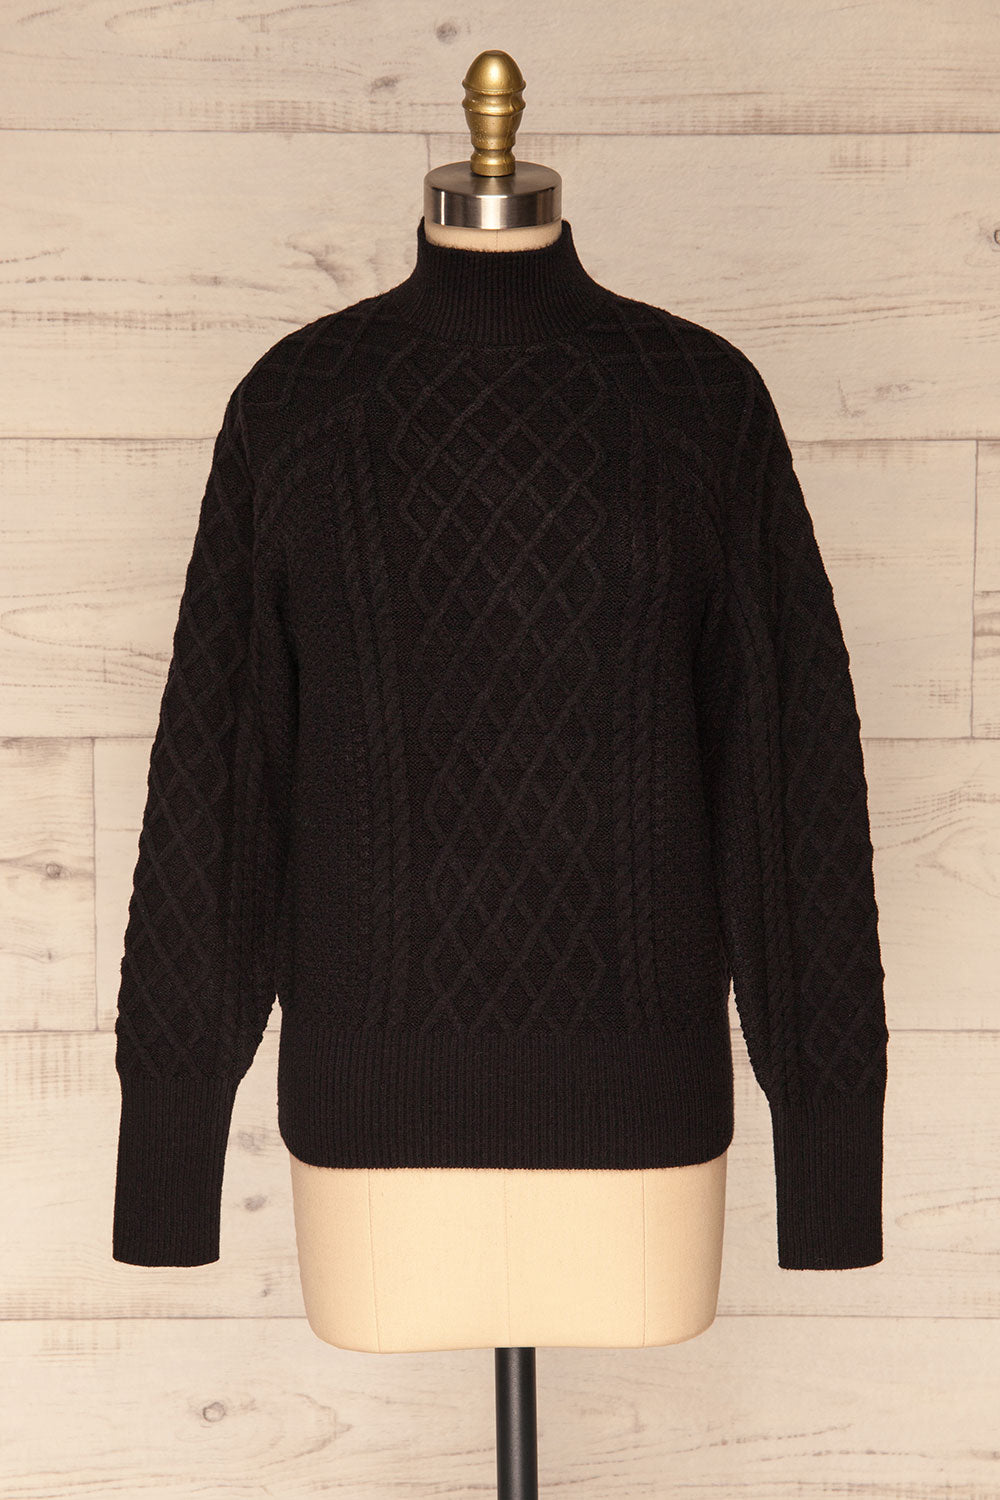 Chimay Anis Black Knit Sweater | FRONT VIEW | La Petite Garçonne